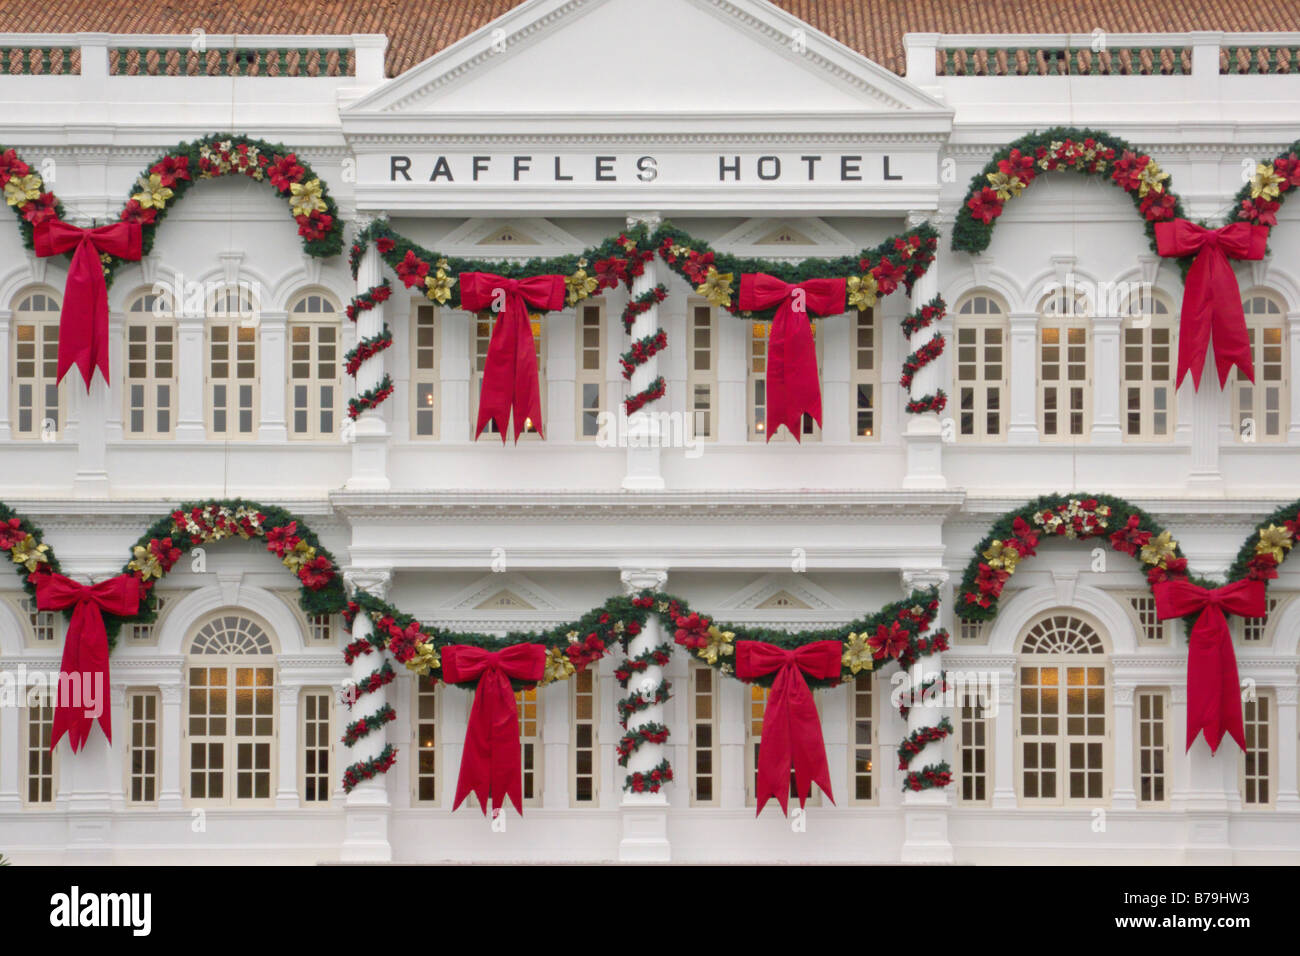 Raffles Hotel with Christmas decoration, Singapore Stock Photo  Alamy